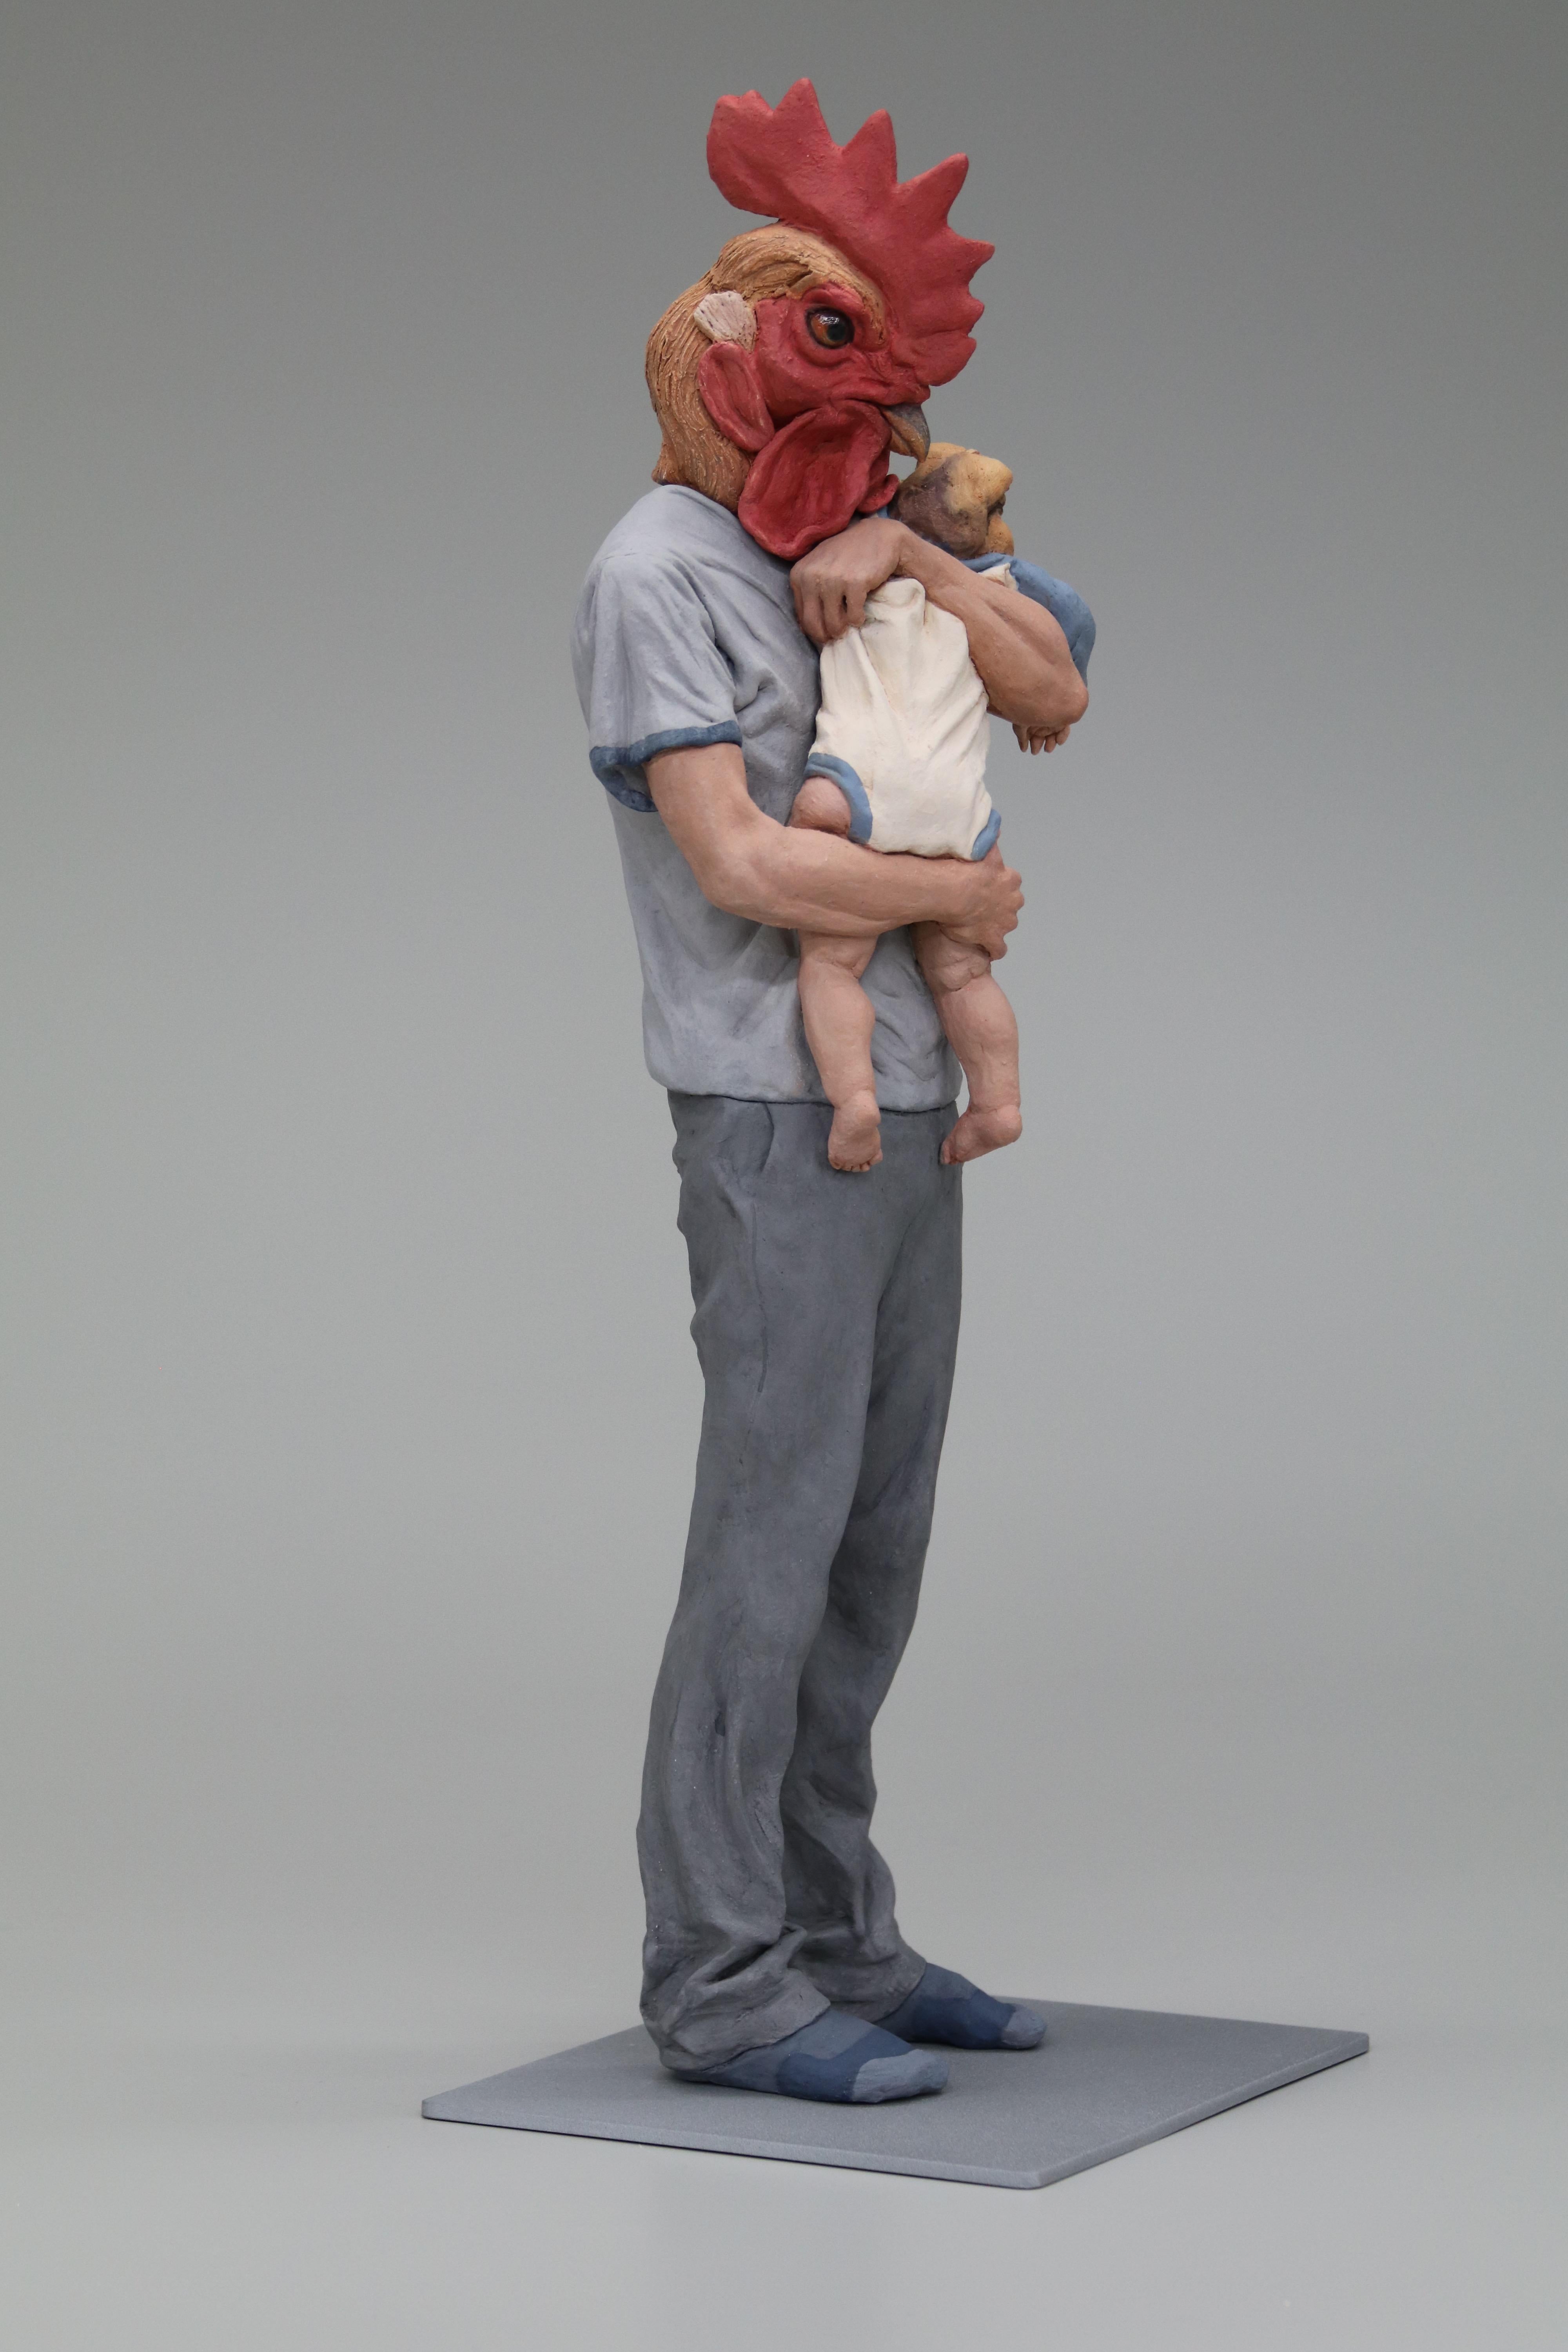 Alessandro Gallo Figurative Sculpture - "The Road", Contemporary, Figurative, Ceramic, Mixed Media, Sculpture, Paint